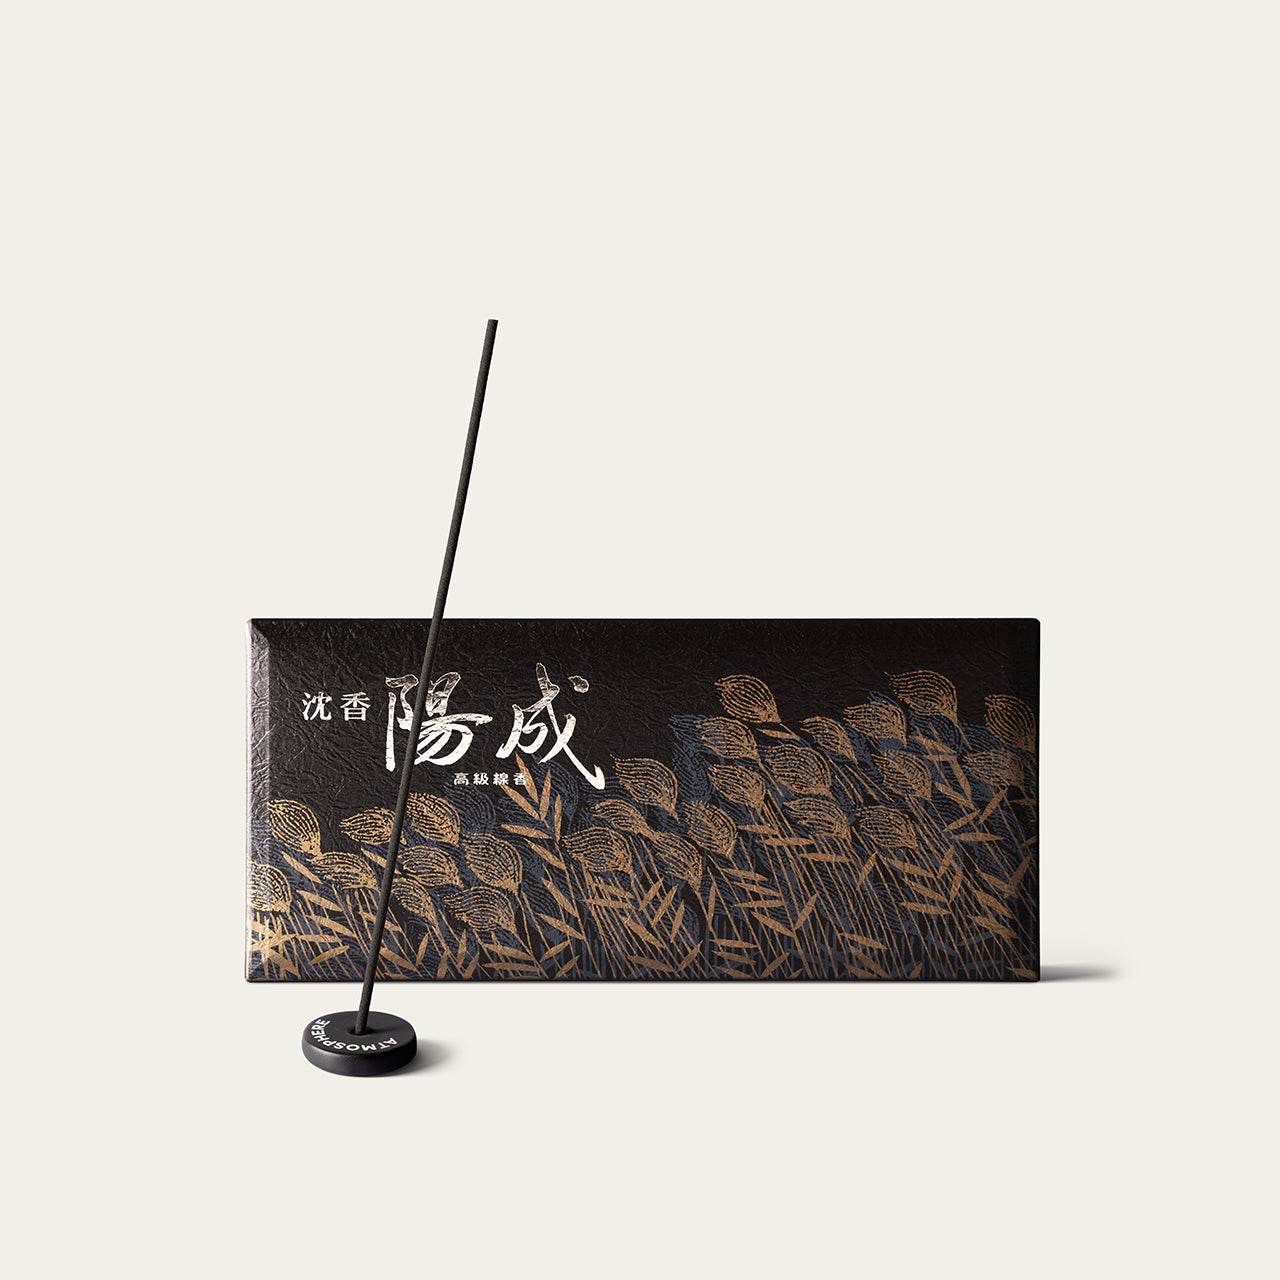 Gyokushodo Jinko Yozei Agarwood Radiance Japanese incense sticks (280 sticks) with Atmosphere ceramic incense holder